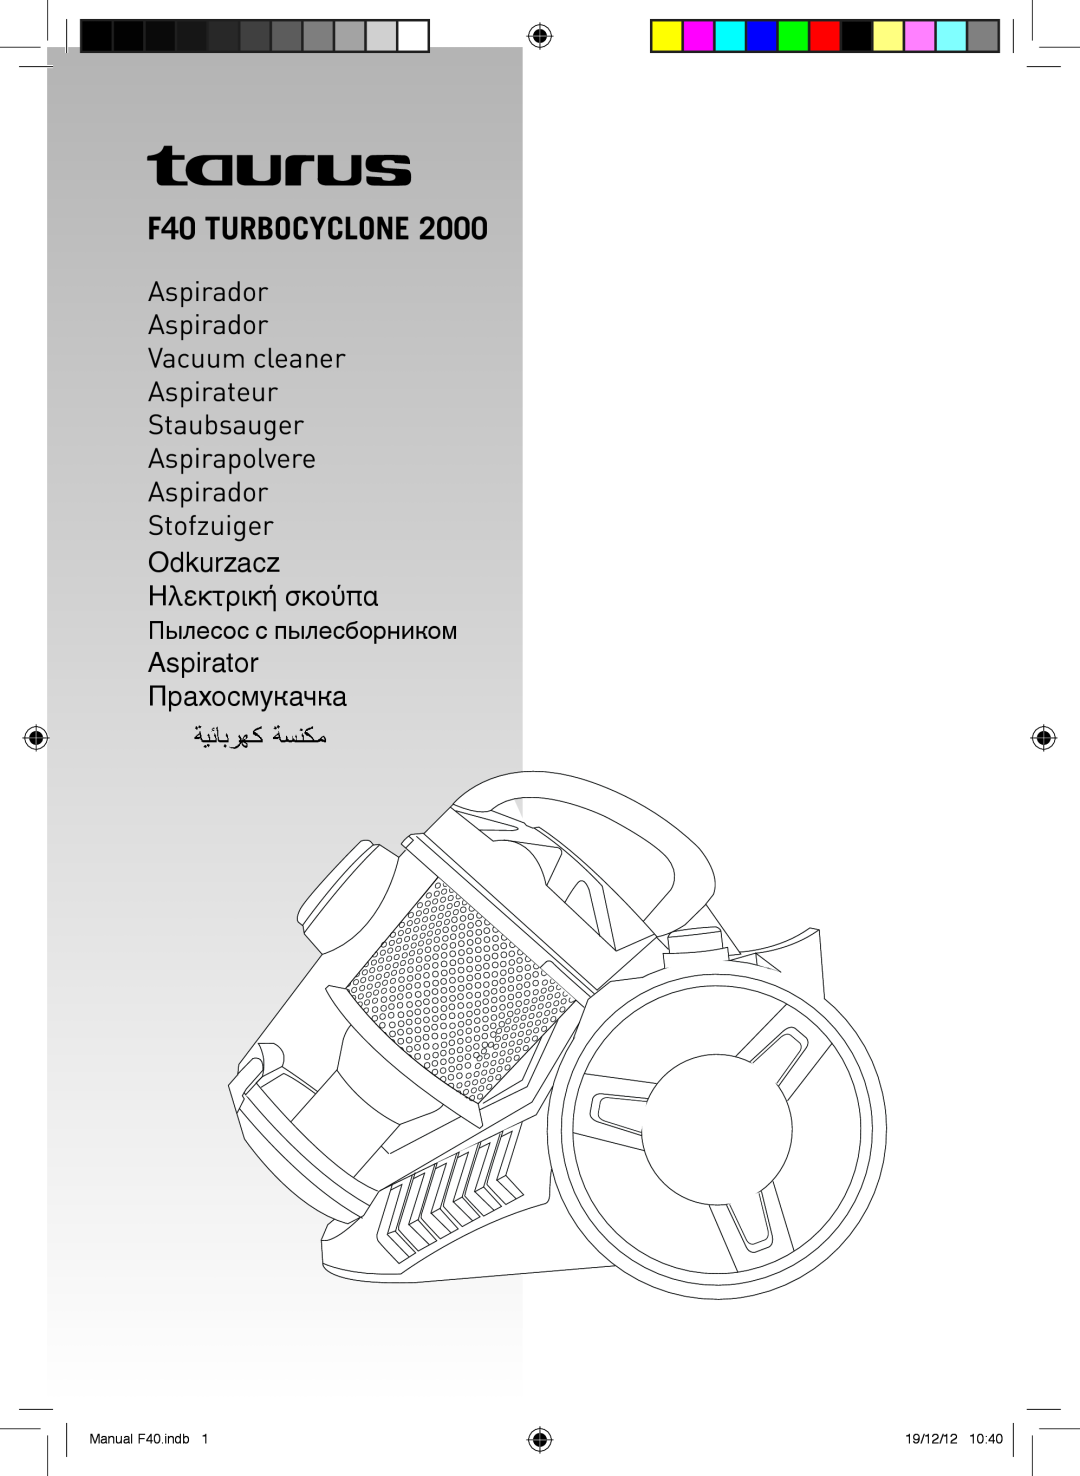 Taurus Group f40 turbocyclone 2000 manual F40 TURBOCYCLONE, Aspirador Aspirador Vacuum cleaner Aspirateur, Manual F40.indb 